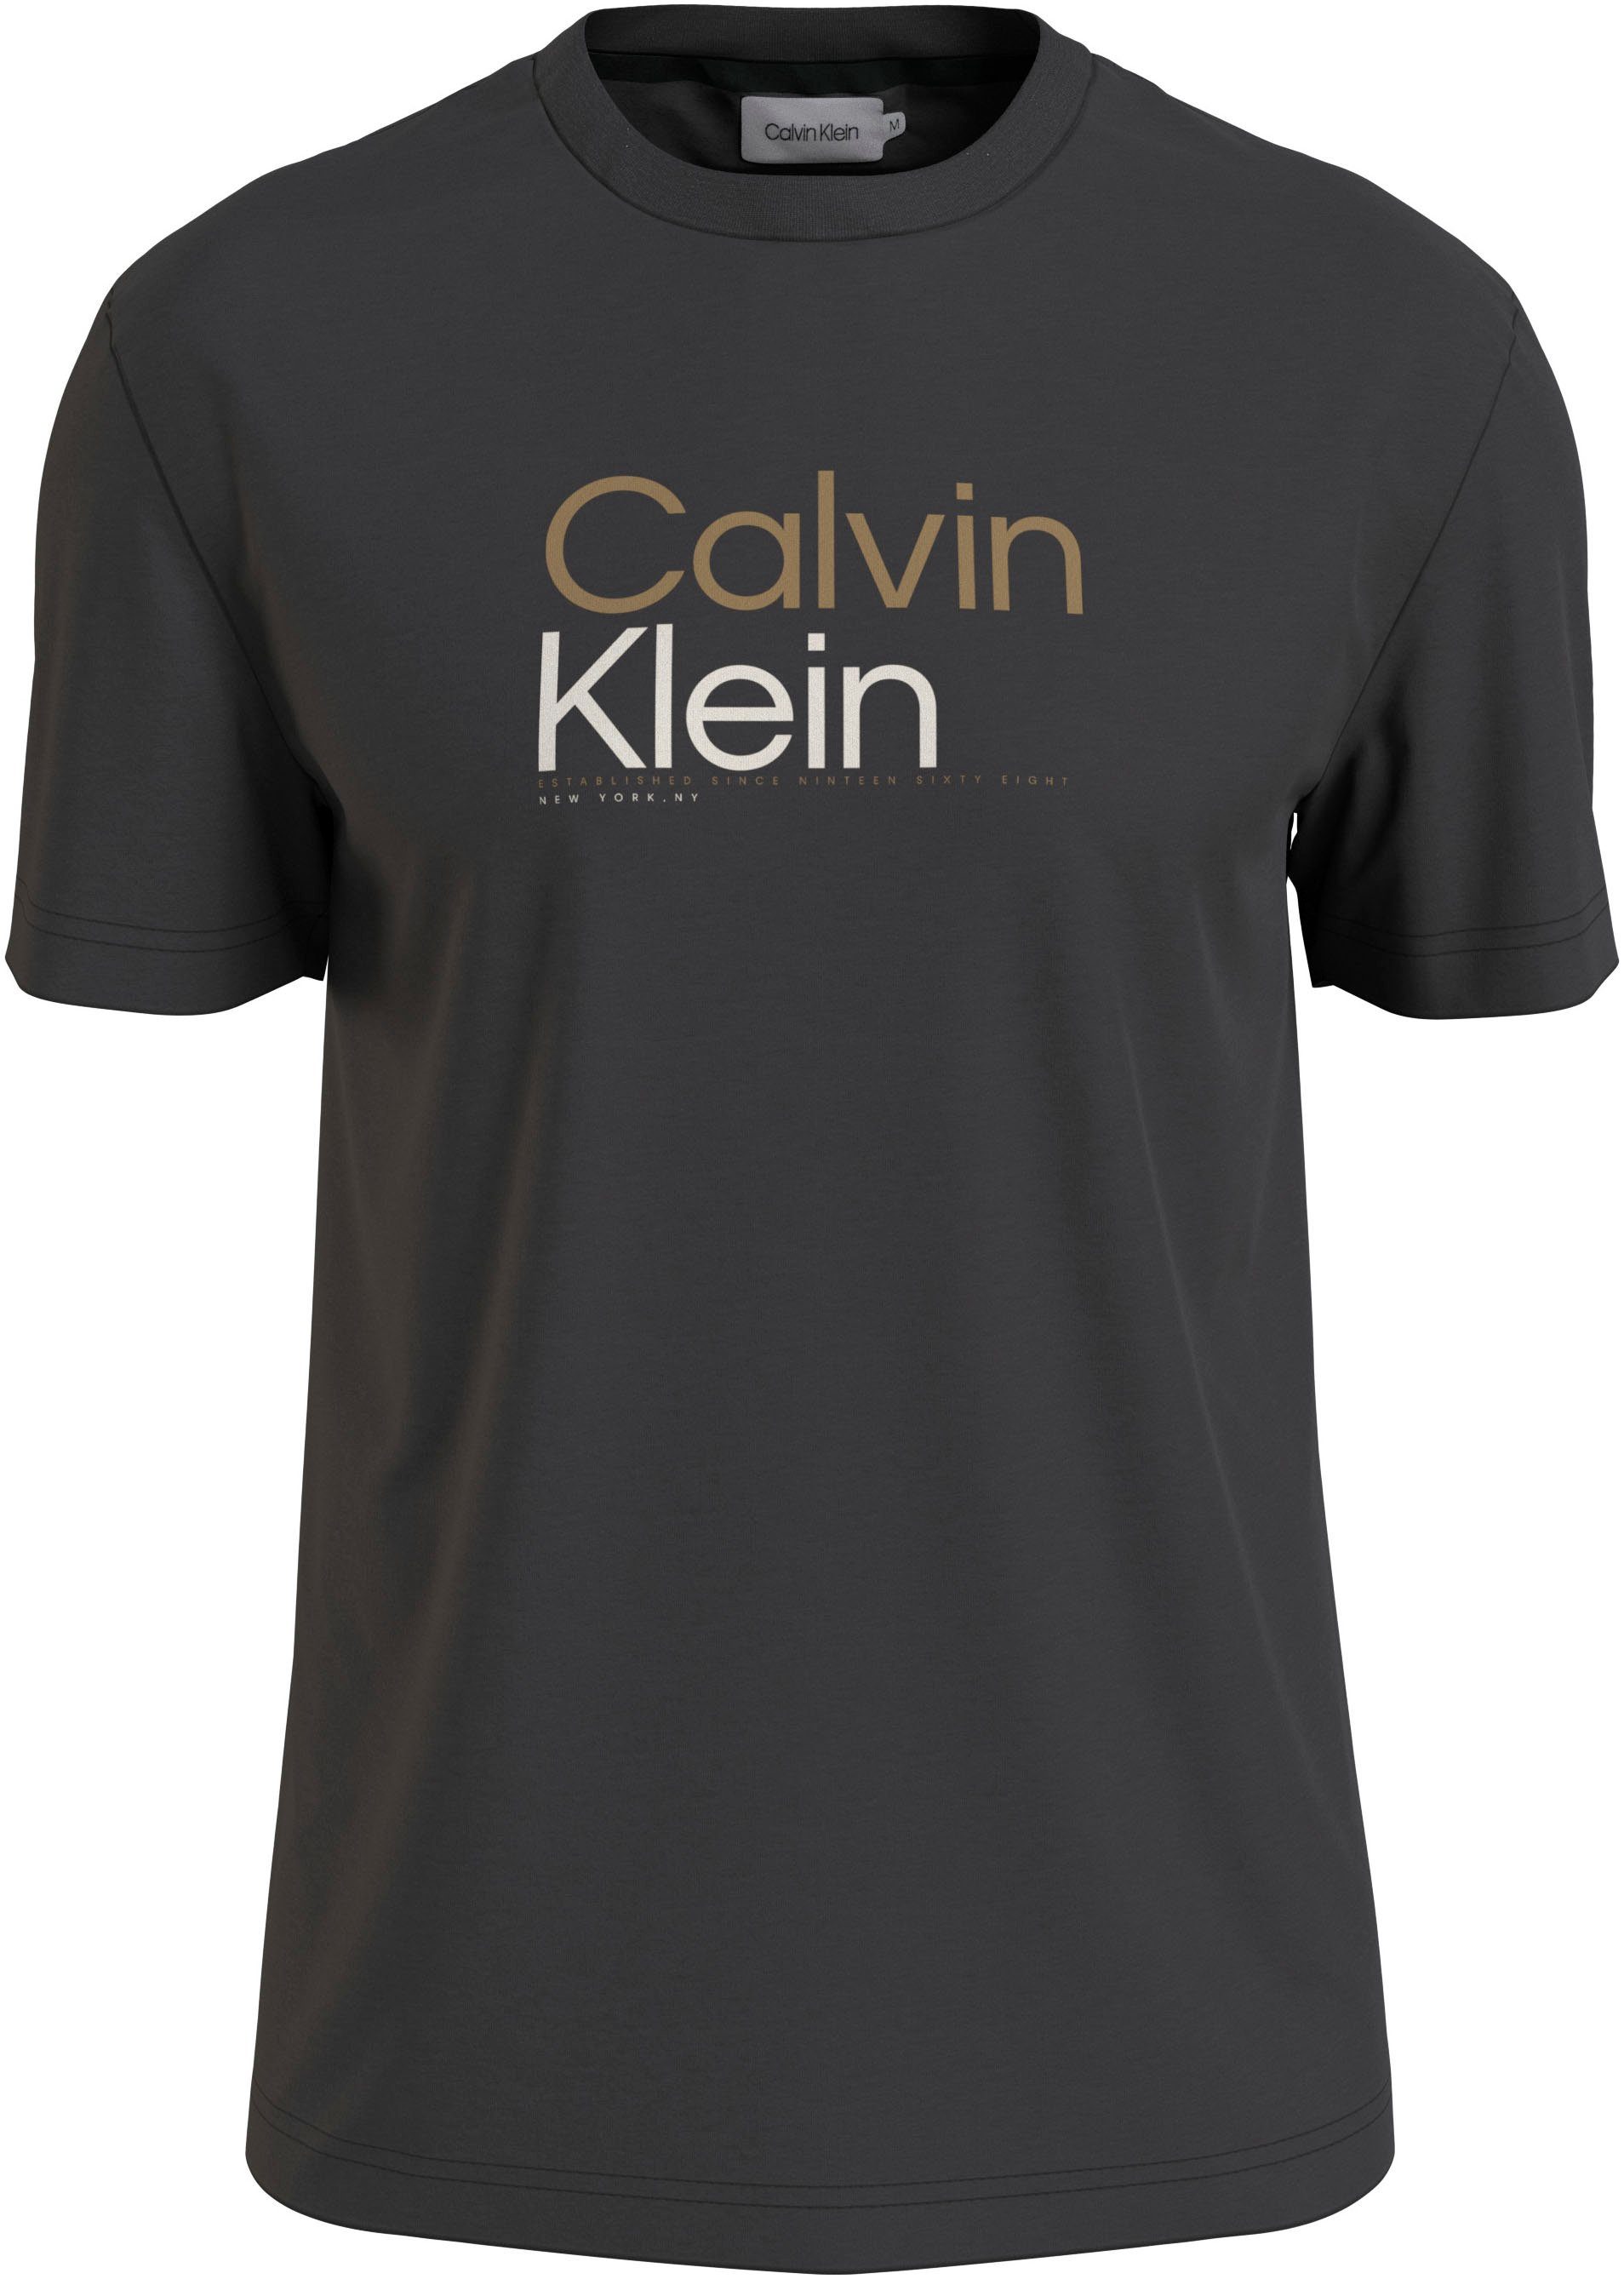 Calvin Klein T-SHIRT mit BT_MULTI Markenlabel Big&Tall Black T-Shirt COLOR Ck LOGO